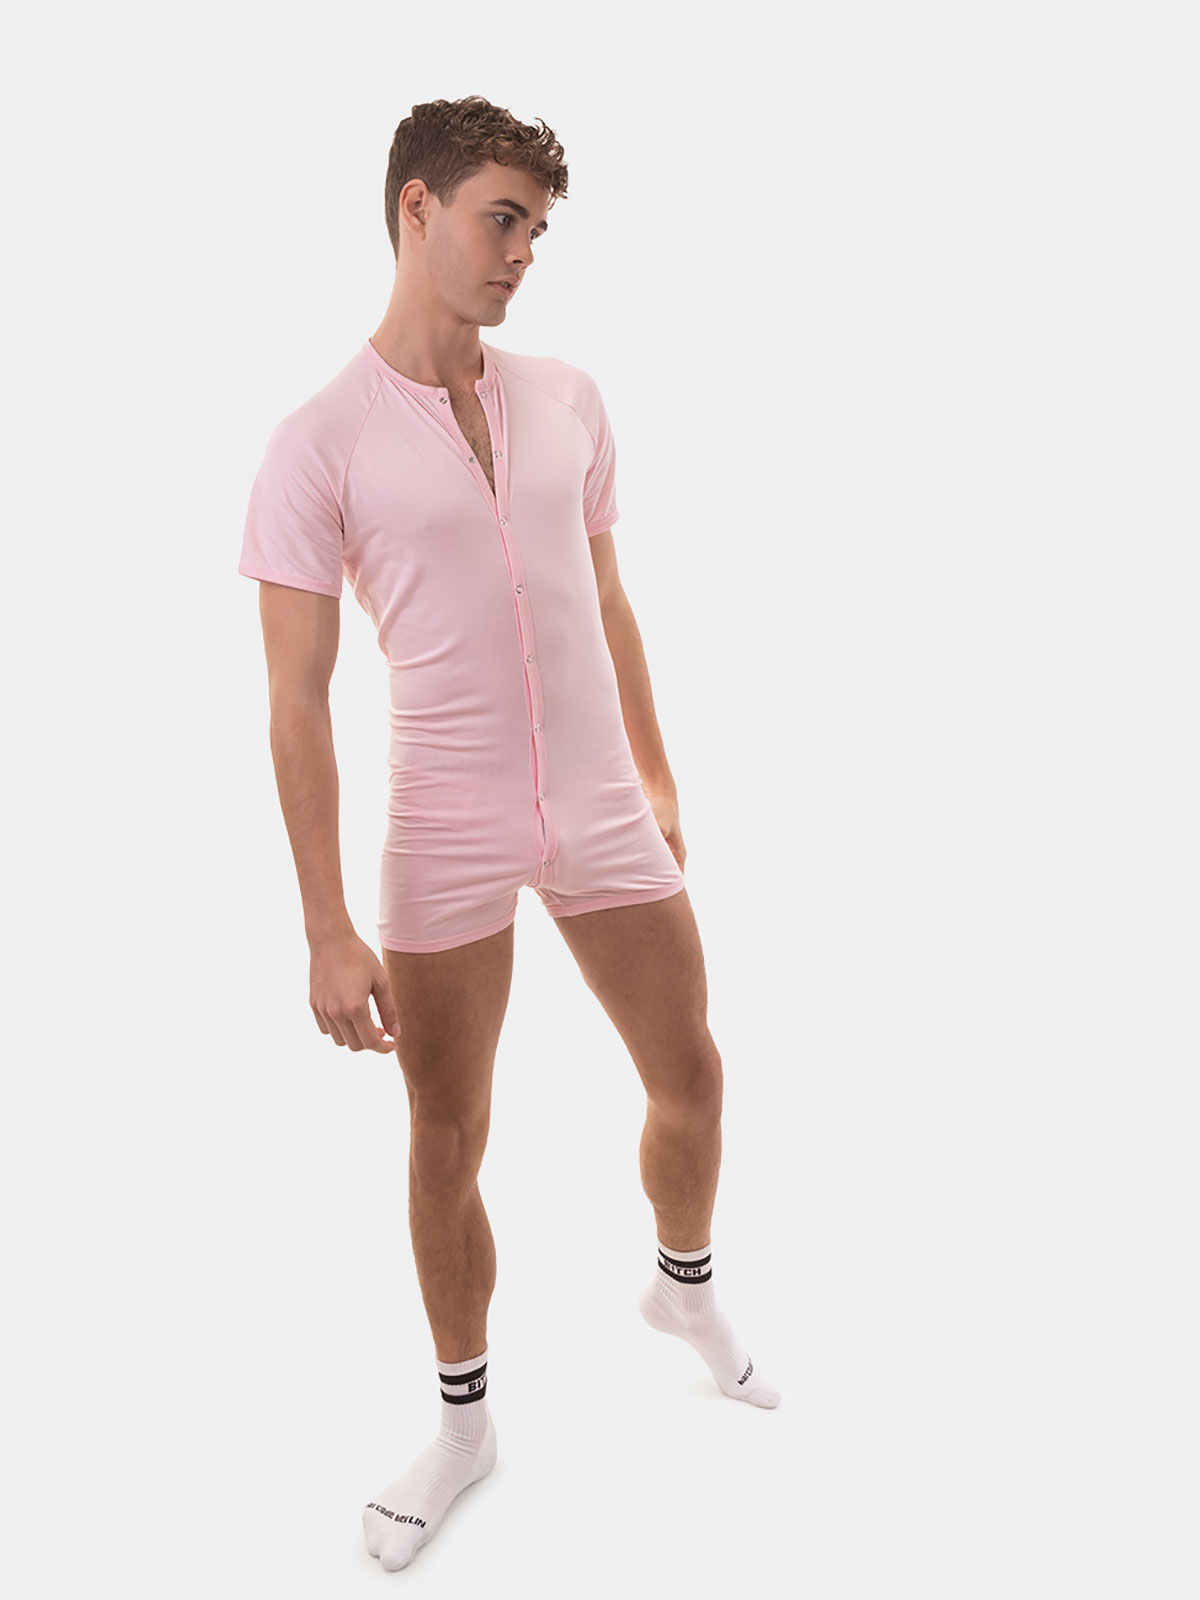 Body Union Suit Varva | Pink